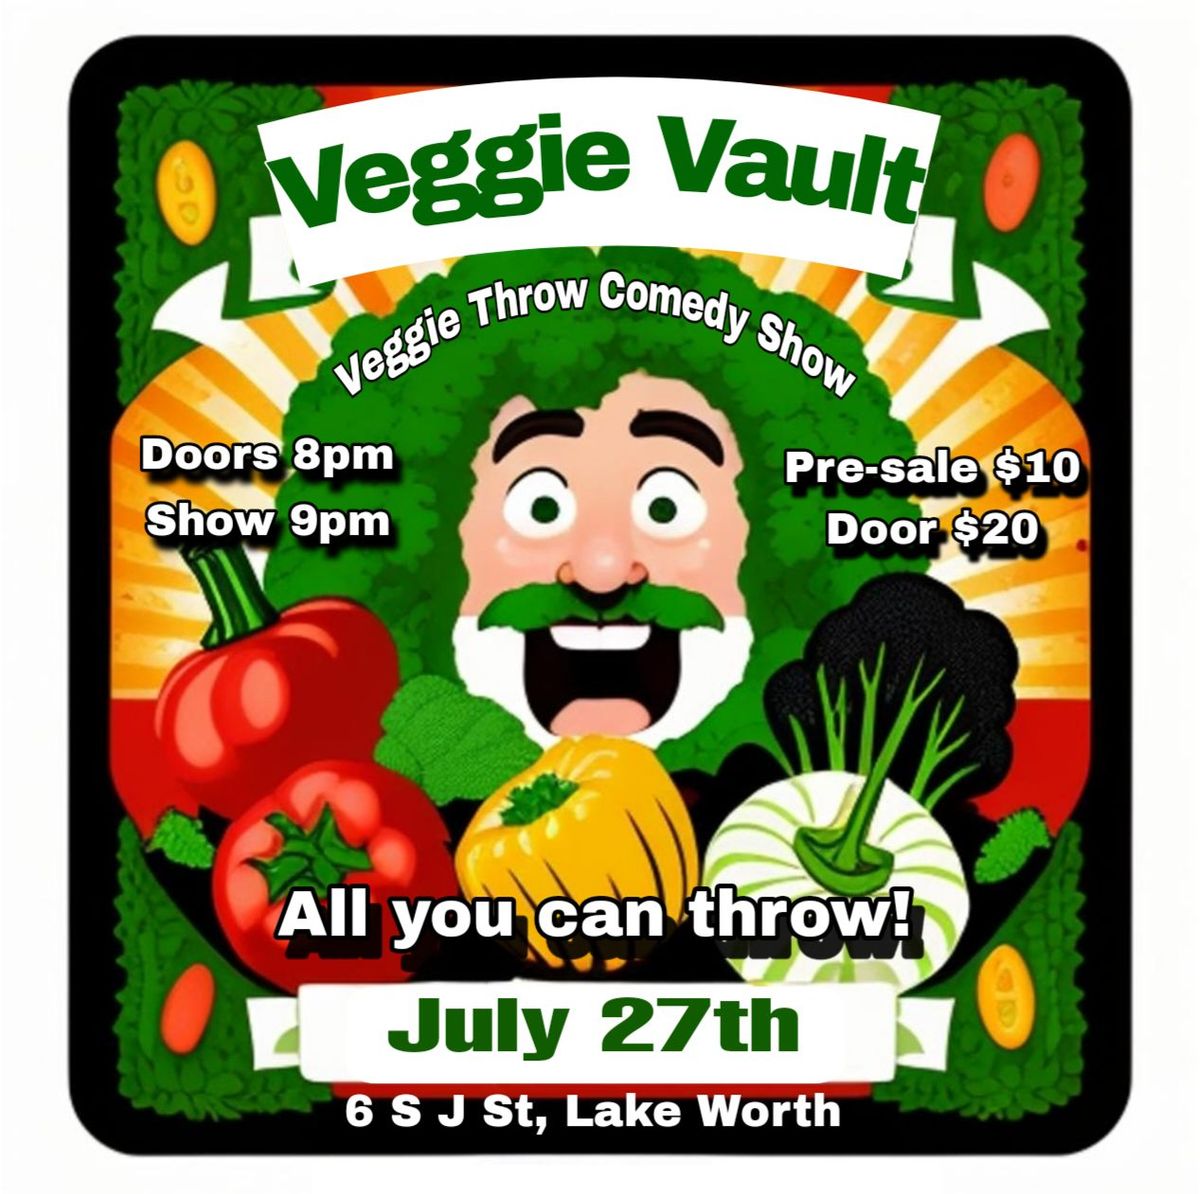 Veggie Vault - Veggie Throw Comedy Show